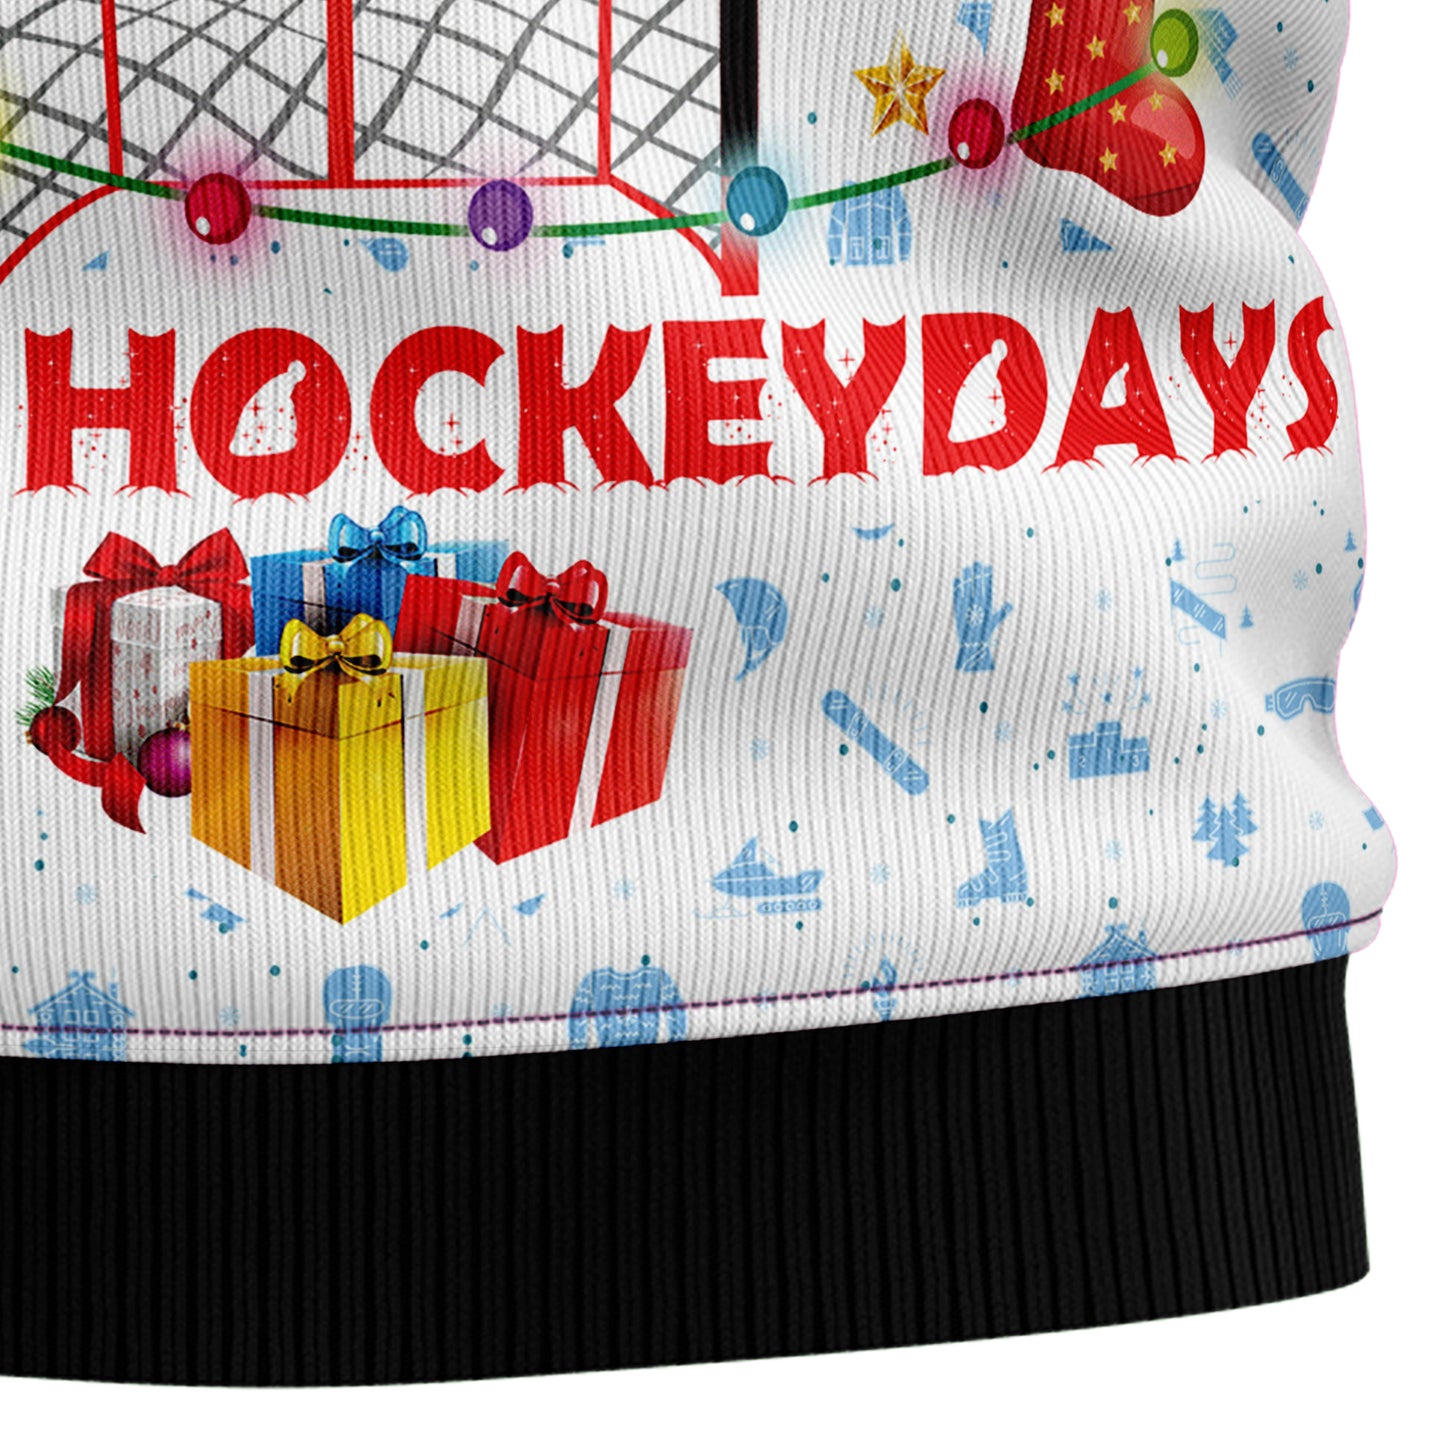 Happy Hockey Day TG5115 Ugly Christmas Sweater